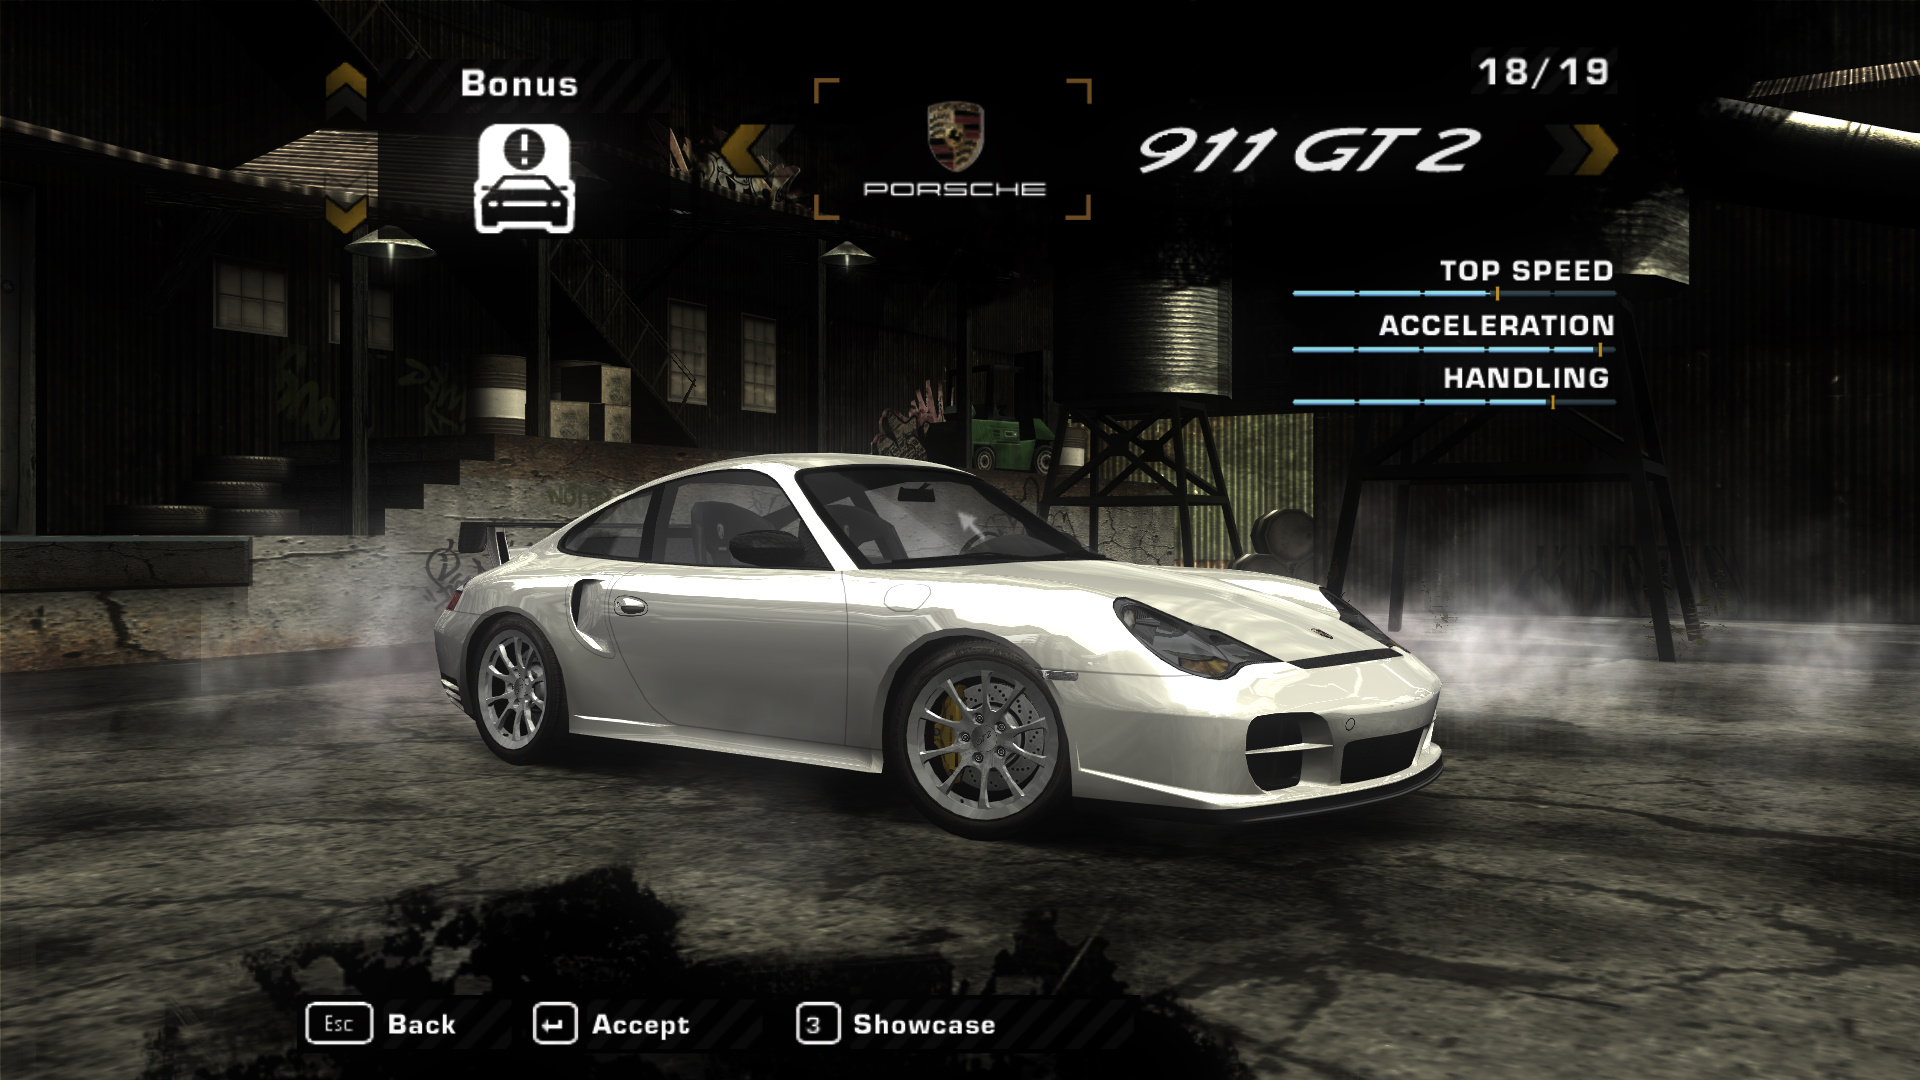 Need For Speed Most Wanted Fantasy NFSMW: Bonus car tweaks, hard heat level 5.